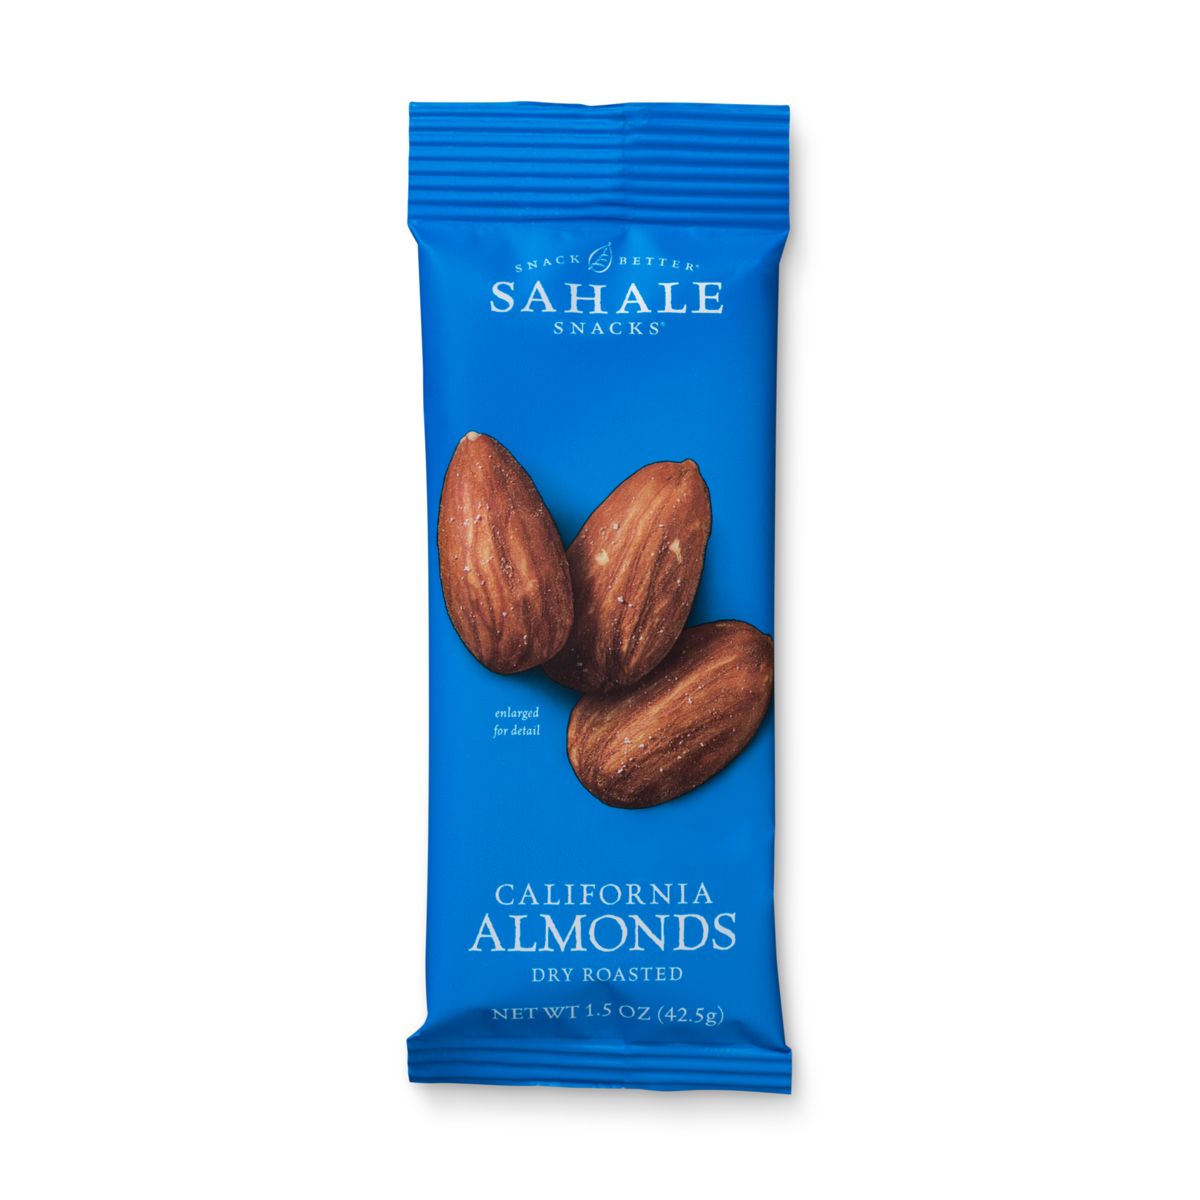 dry-roasted-california-almonds-or-sahale-snacks-r